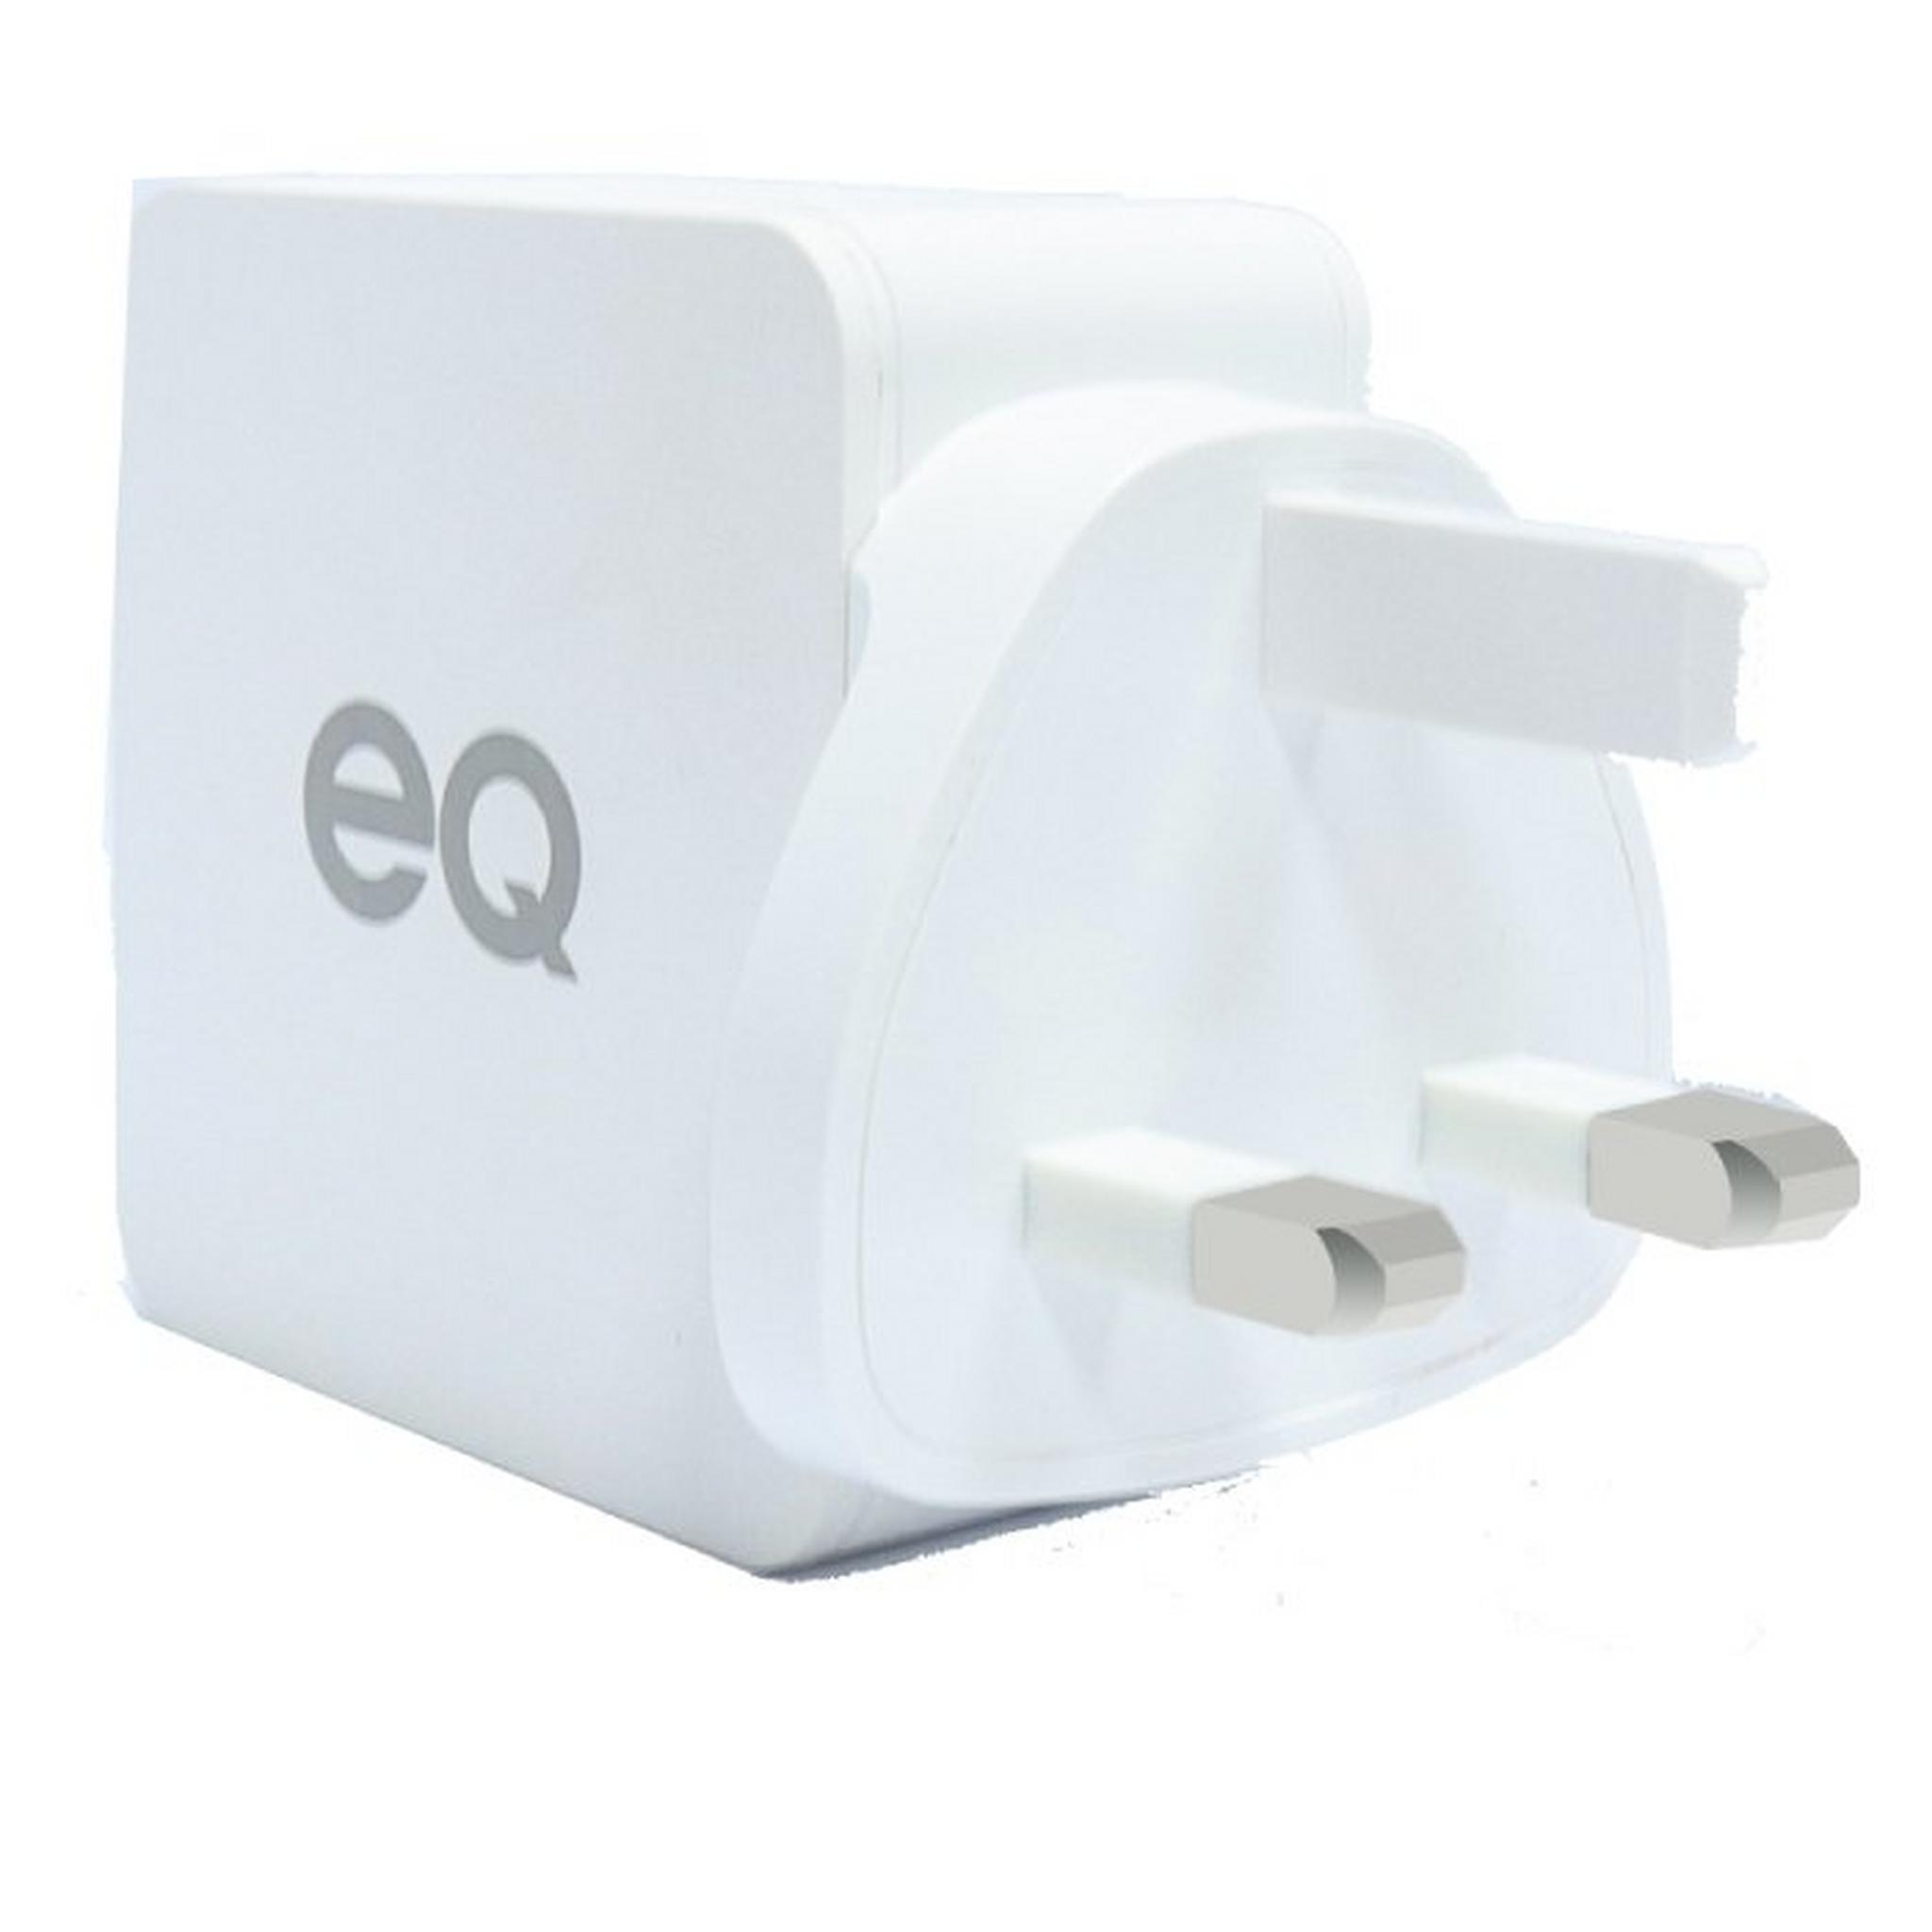 EQ Connectivity & Power Kit 2